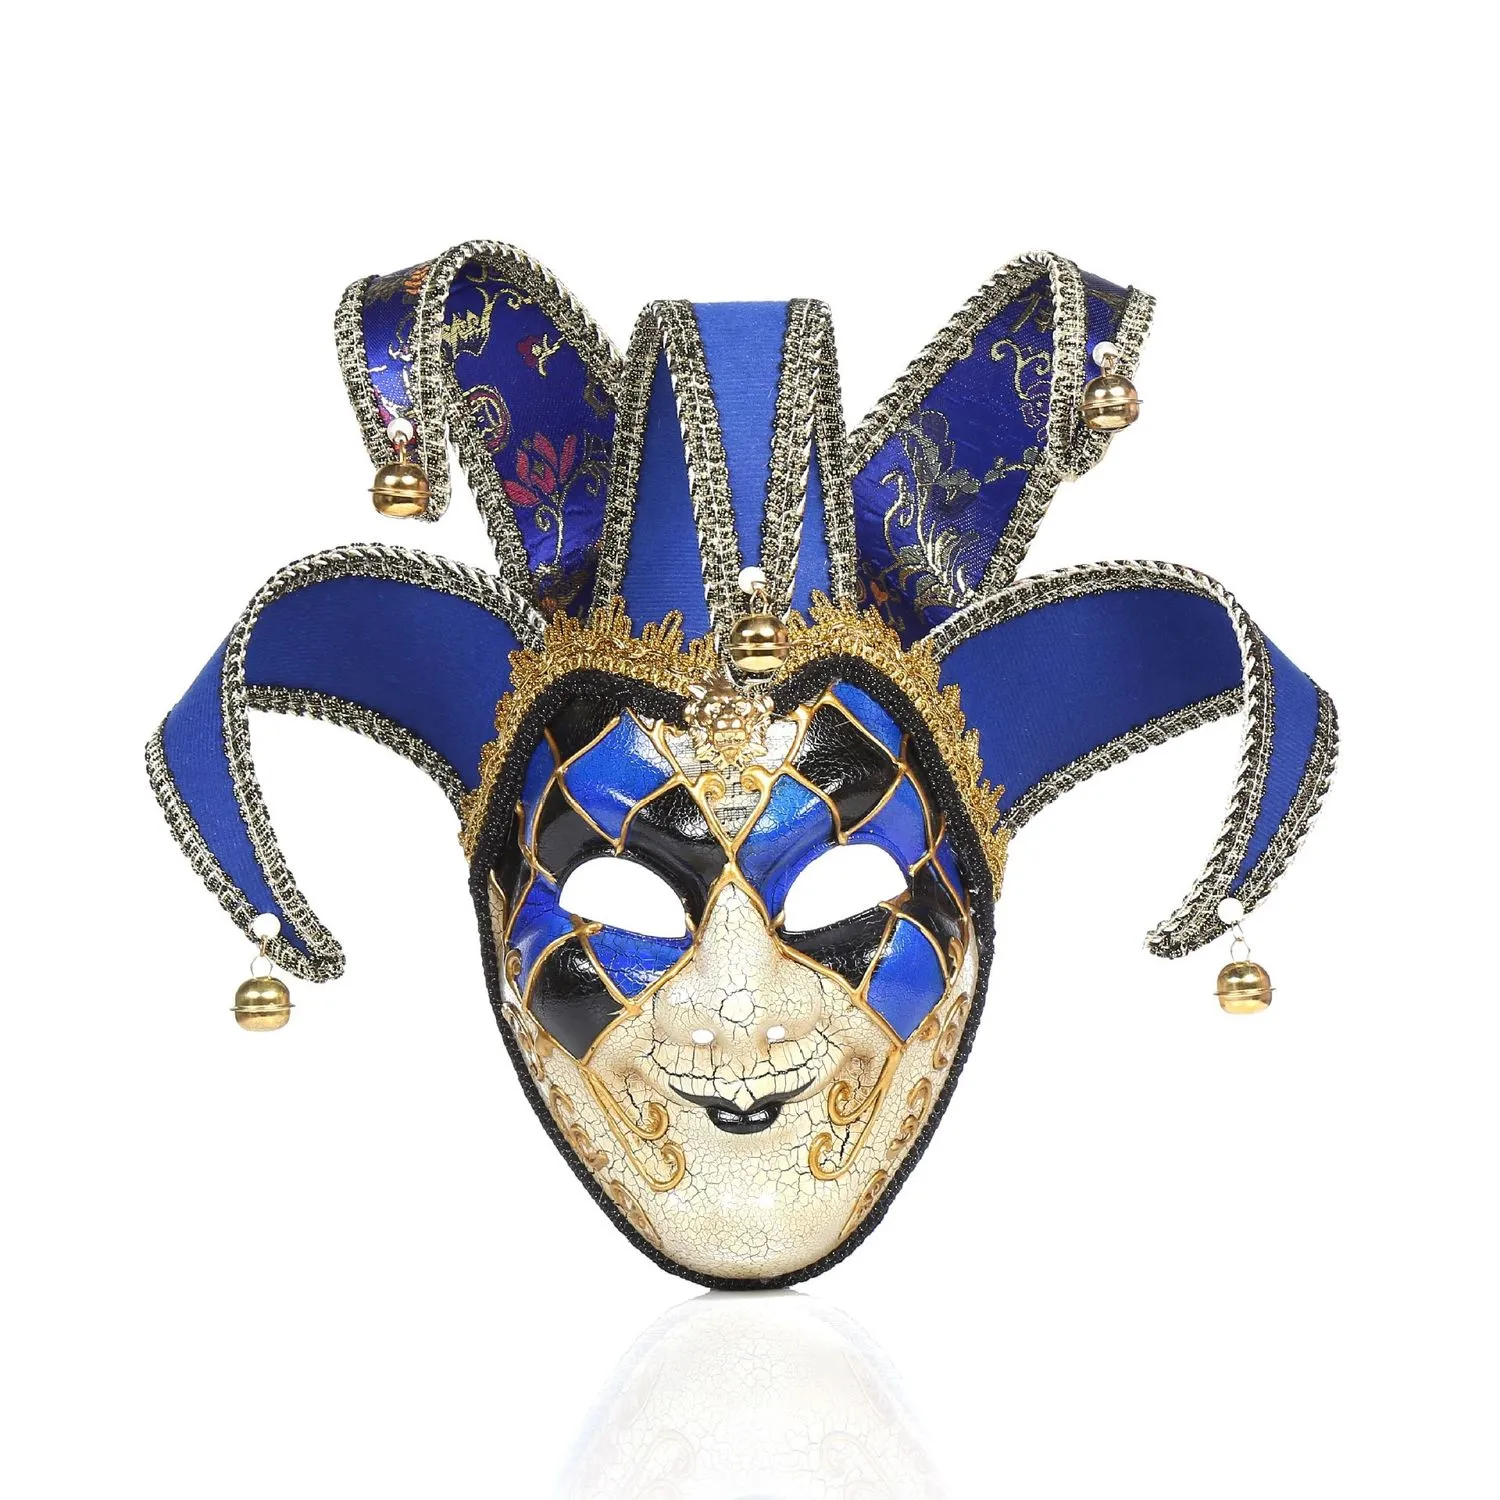 Maschera da donna femminile maschera venezia maschere si colloca maschera maschera natale halloween costumi veneziani carnival anonime maschere t2001169444471